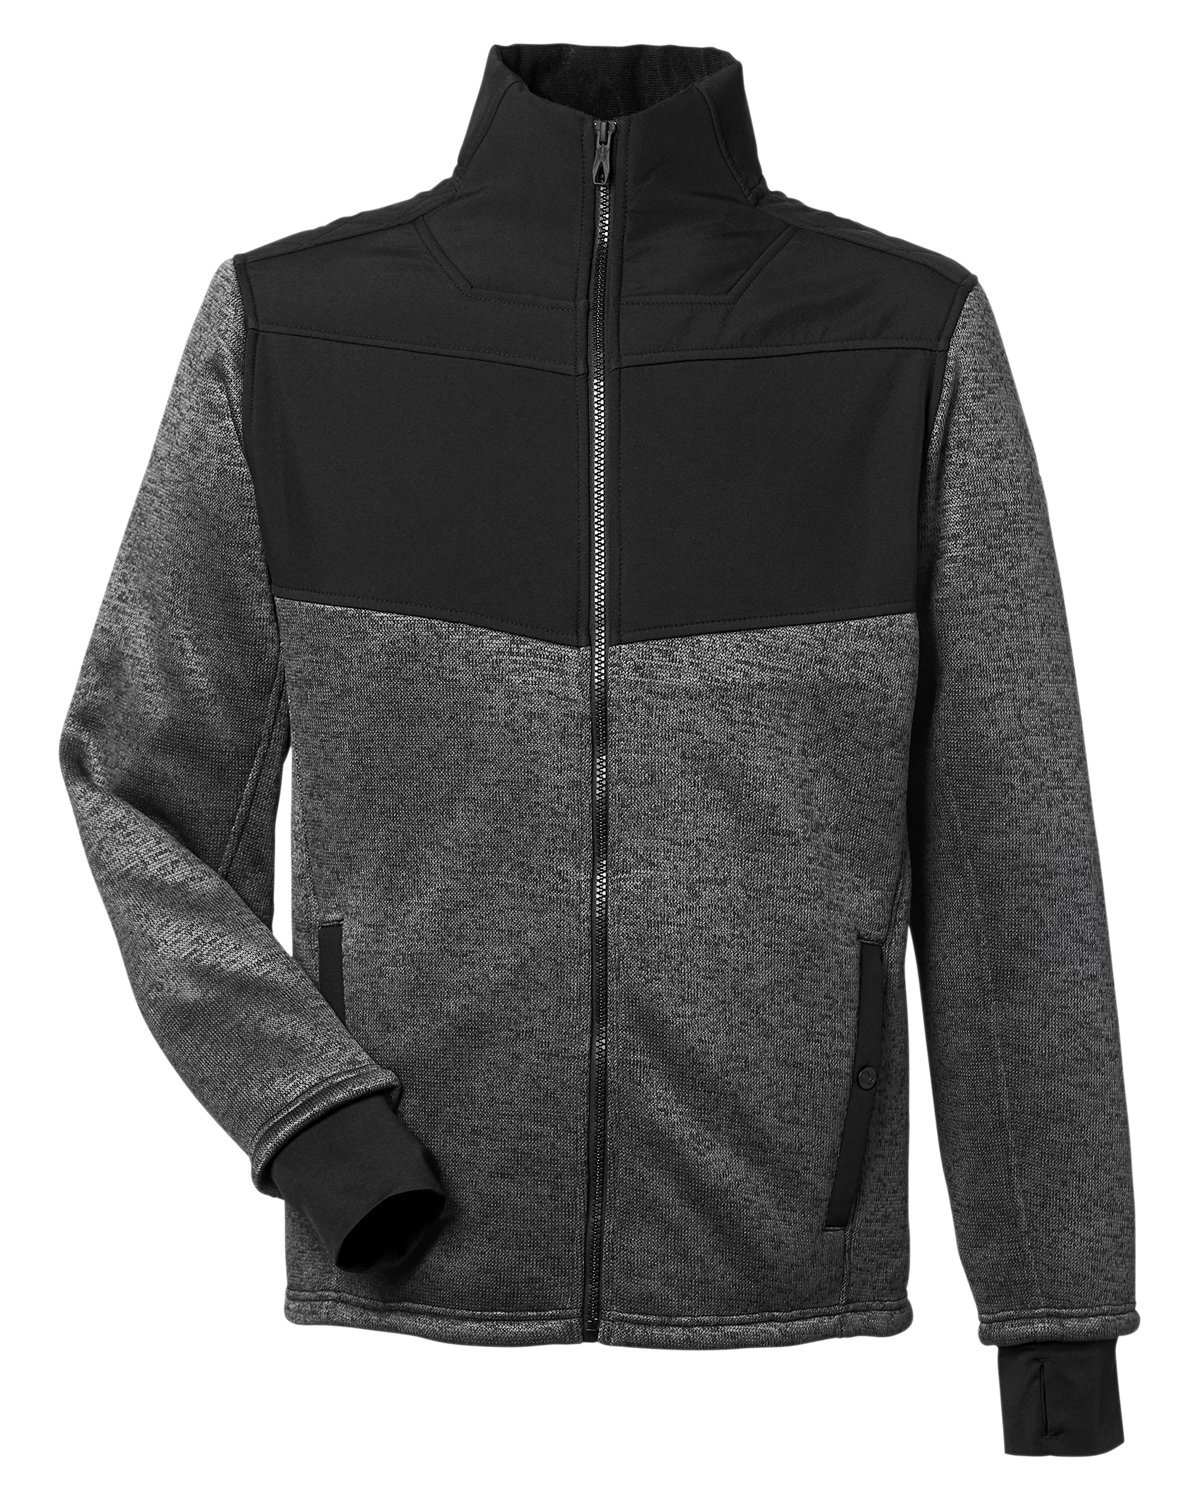 Spyder S17740 - Men's Passage Sweater Jacket